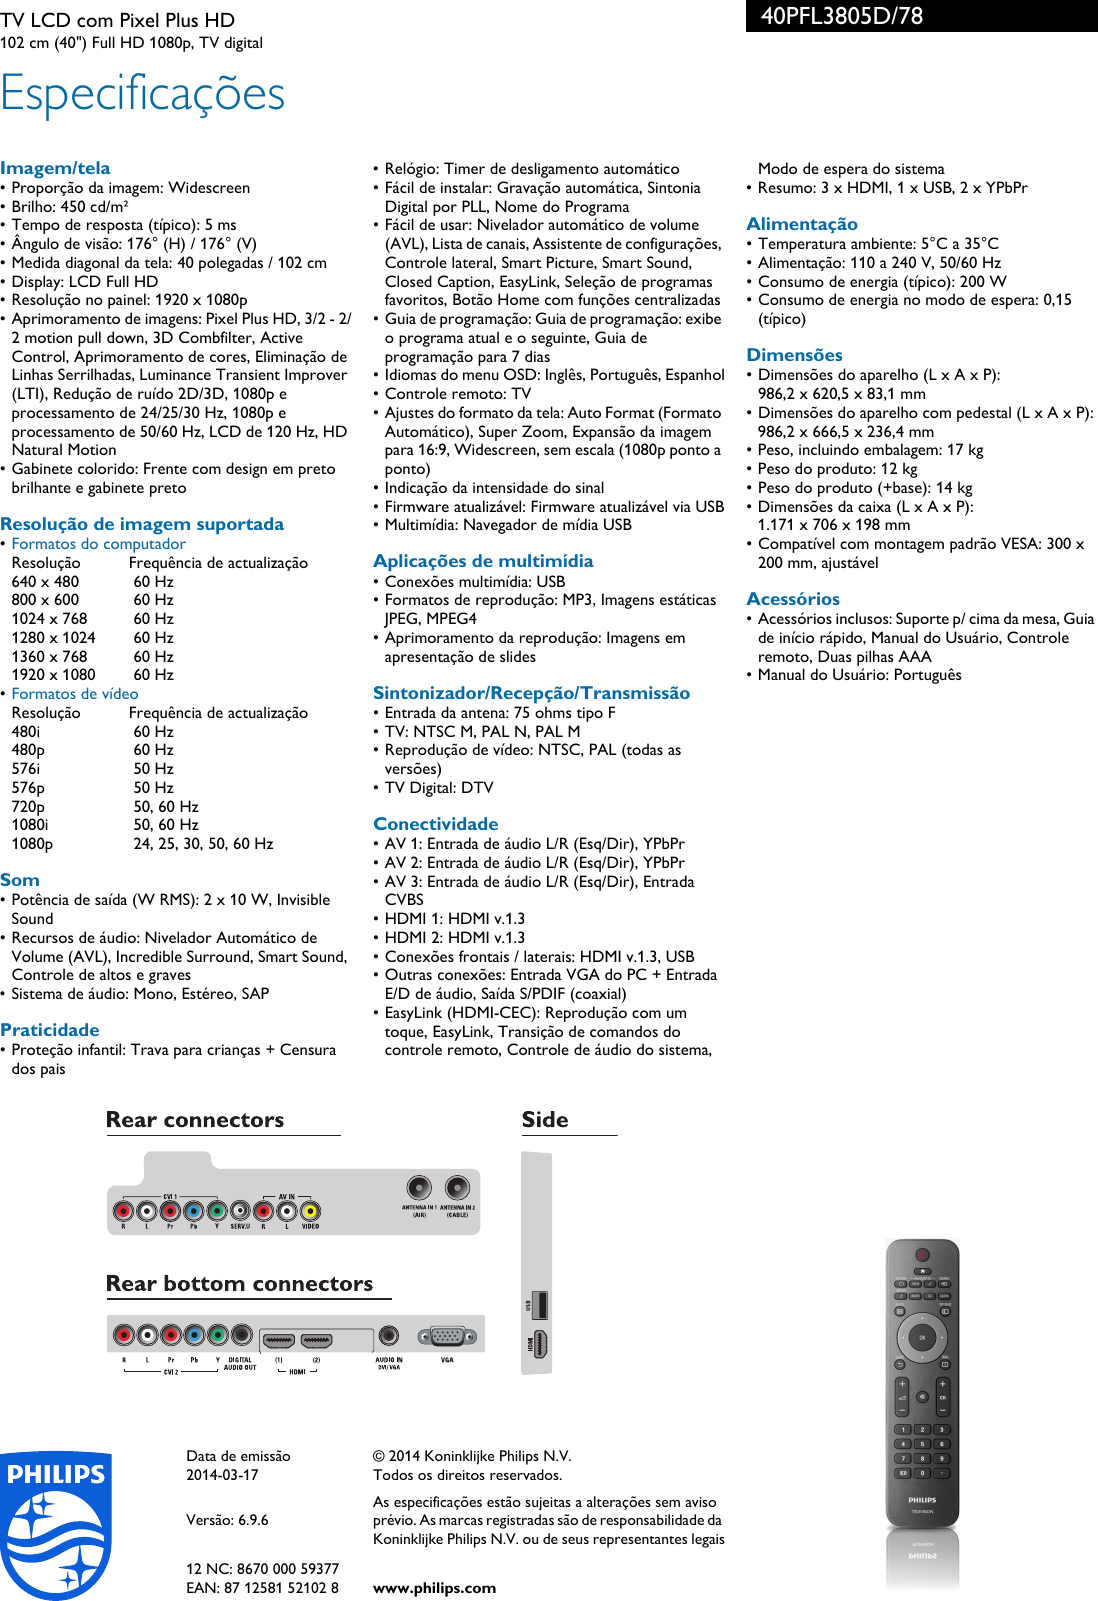 Page 3 of 3 - Philips 40PFL3805D/78 TV LCD Com Pixel Plus HD User Manual Folheto 40pfl3805d 78 Pss Brpbr